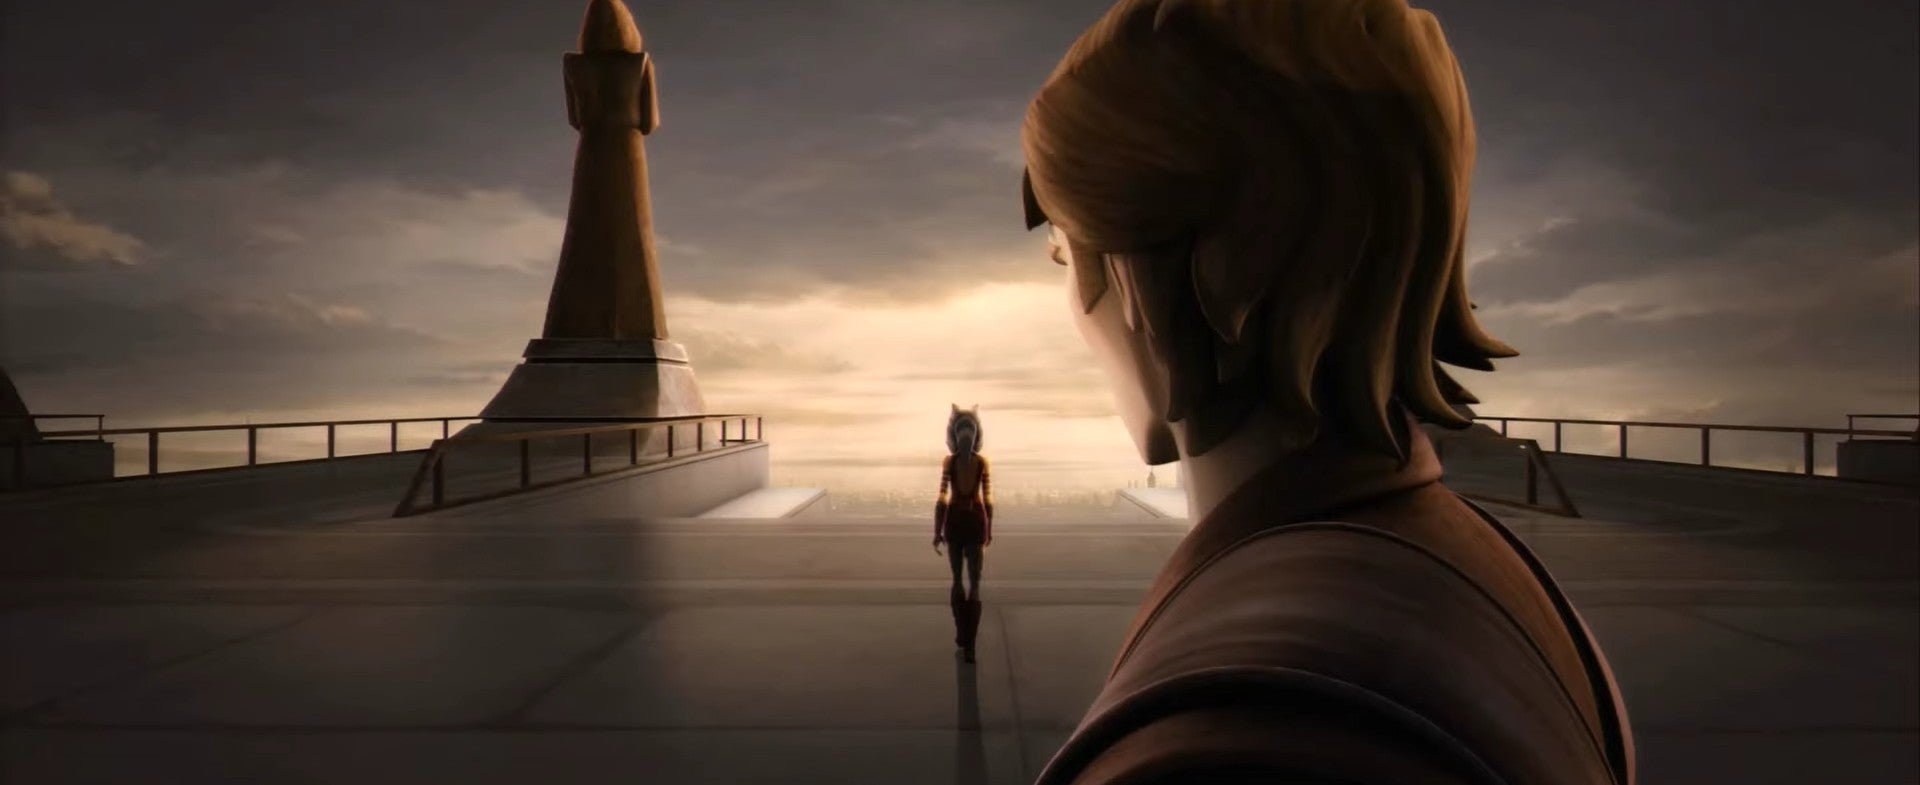 Anakin Skywalker ينظر إلى مغادرة Ahsoka Tano the Star Wars: Clone Wars "الجيداي الخاطئ."